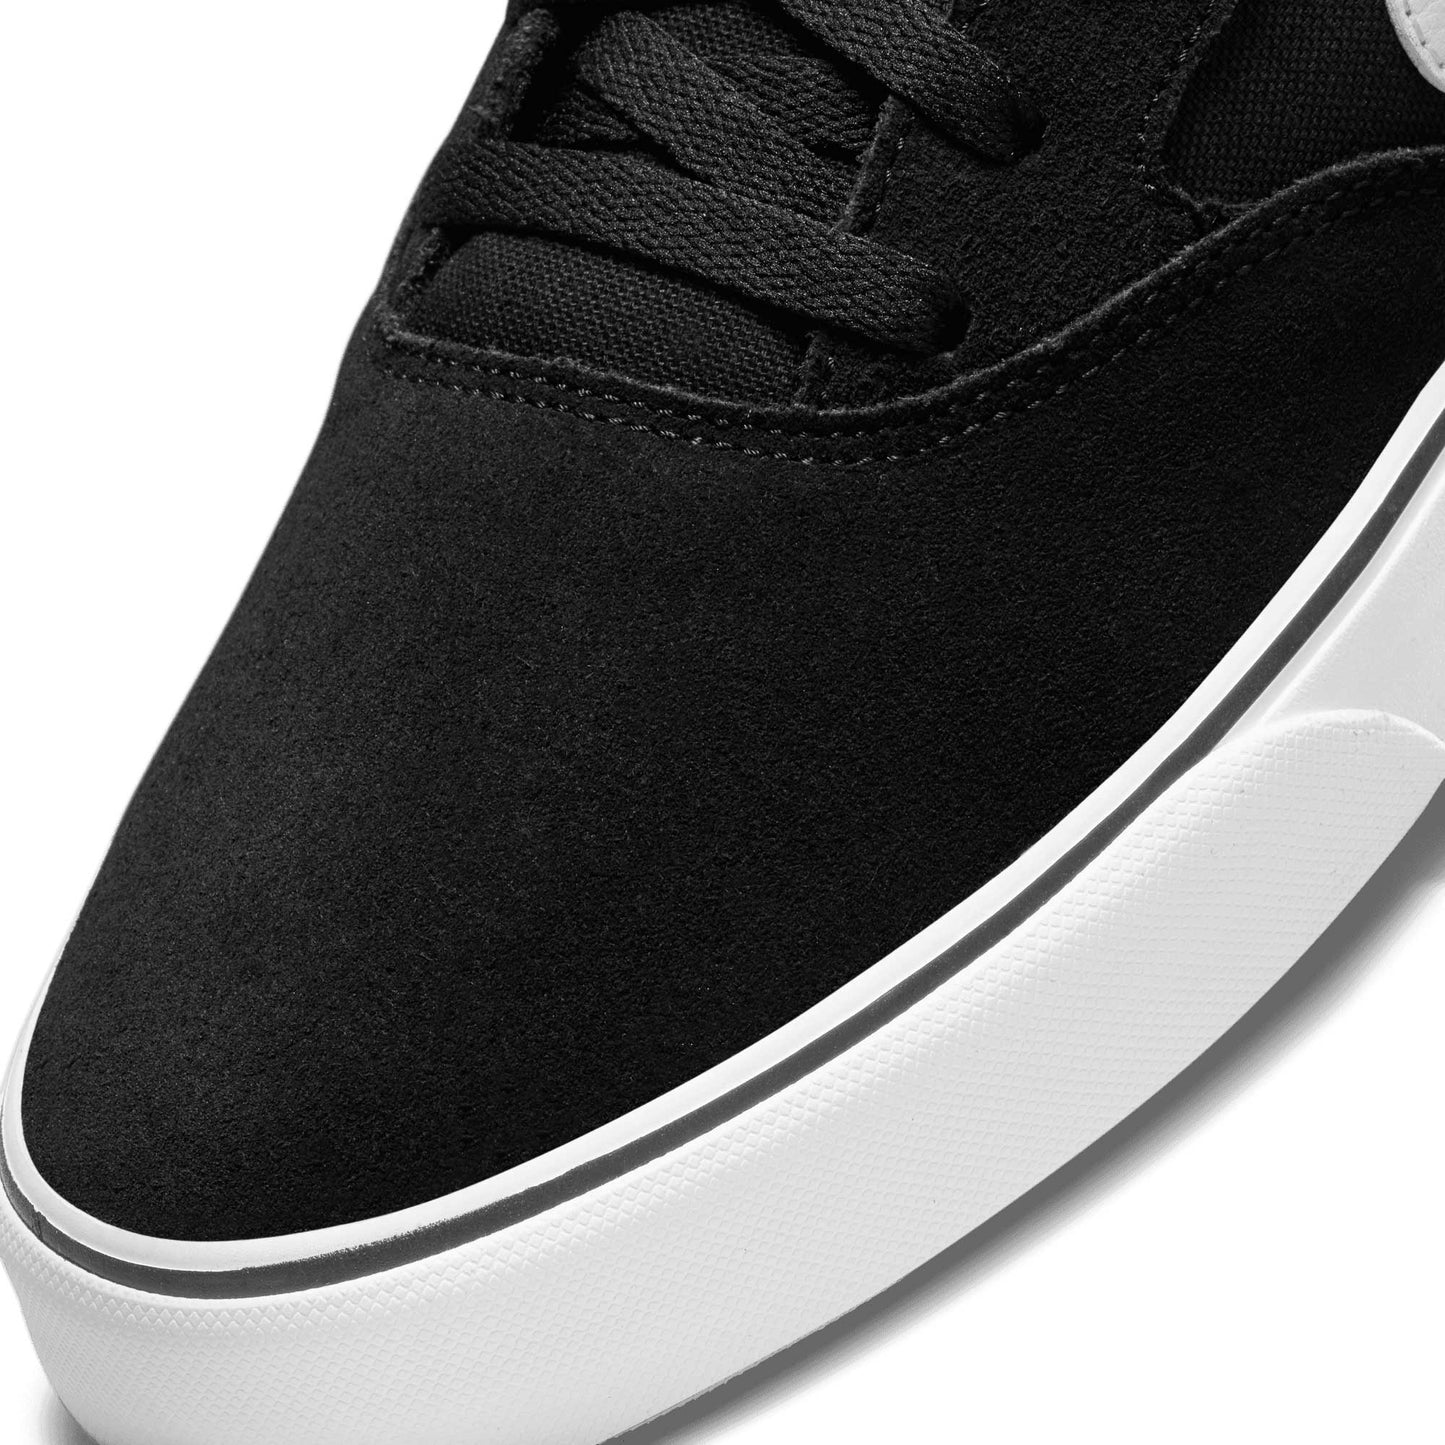 Nike SB Chron 2, black/white-black - Tiki Room Skateboards - 3